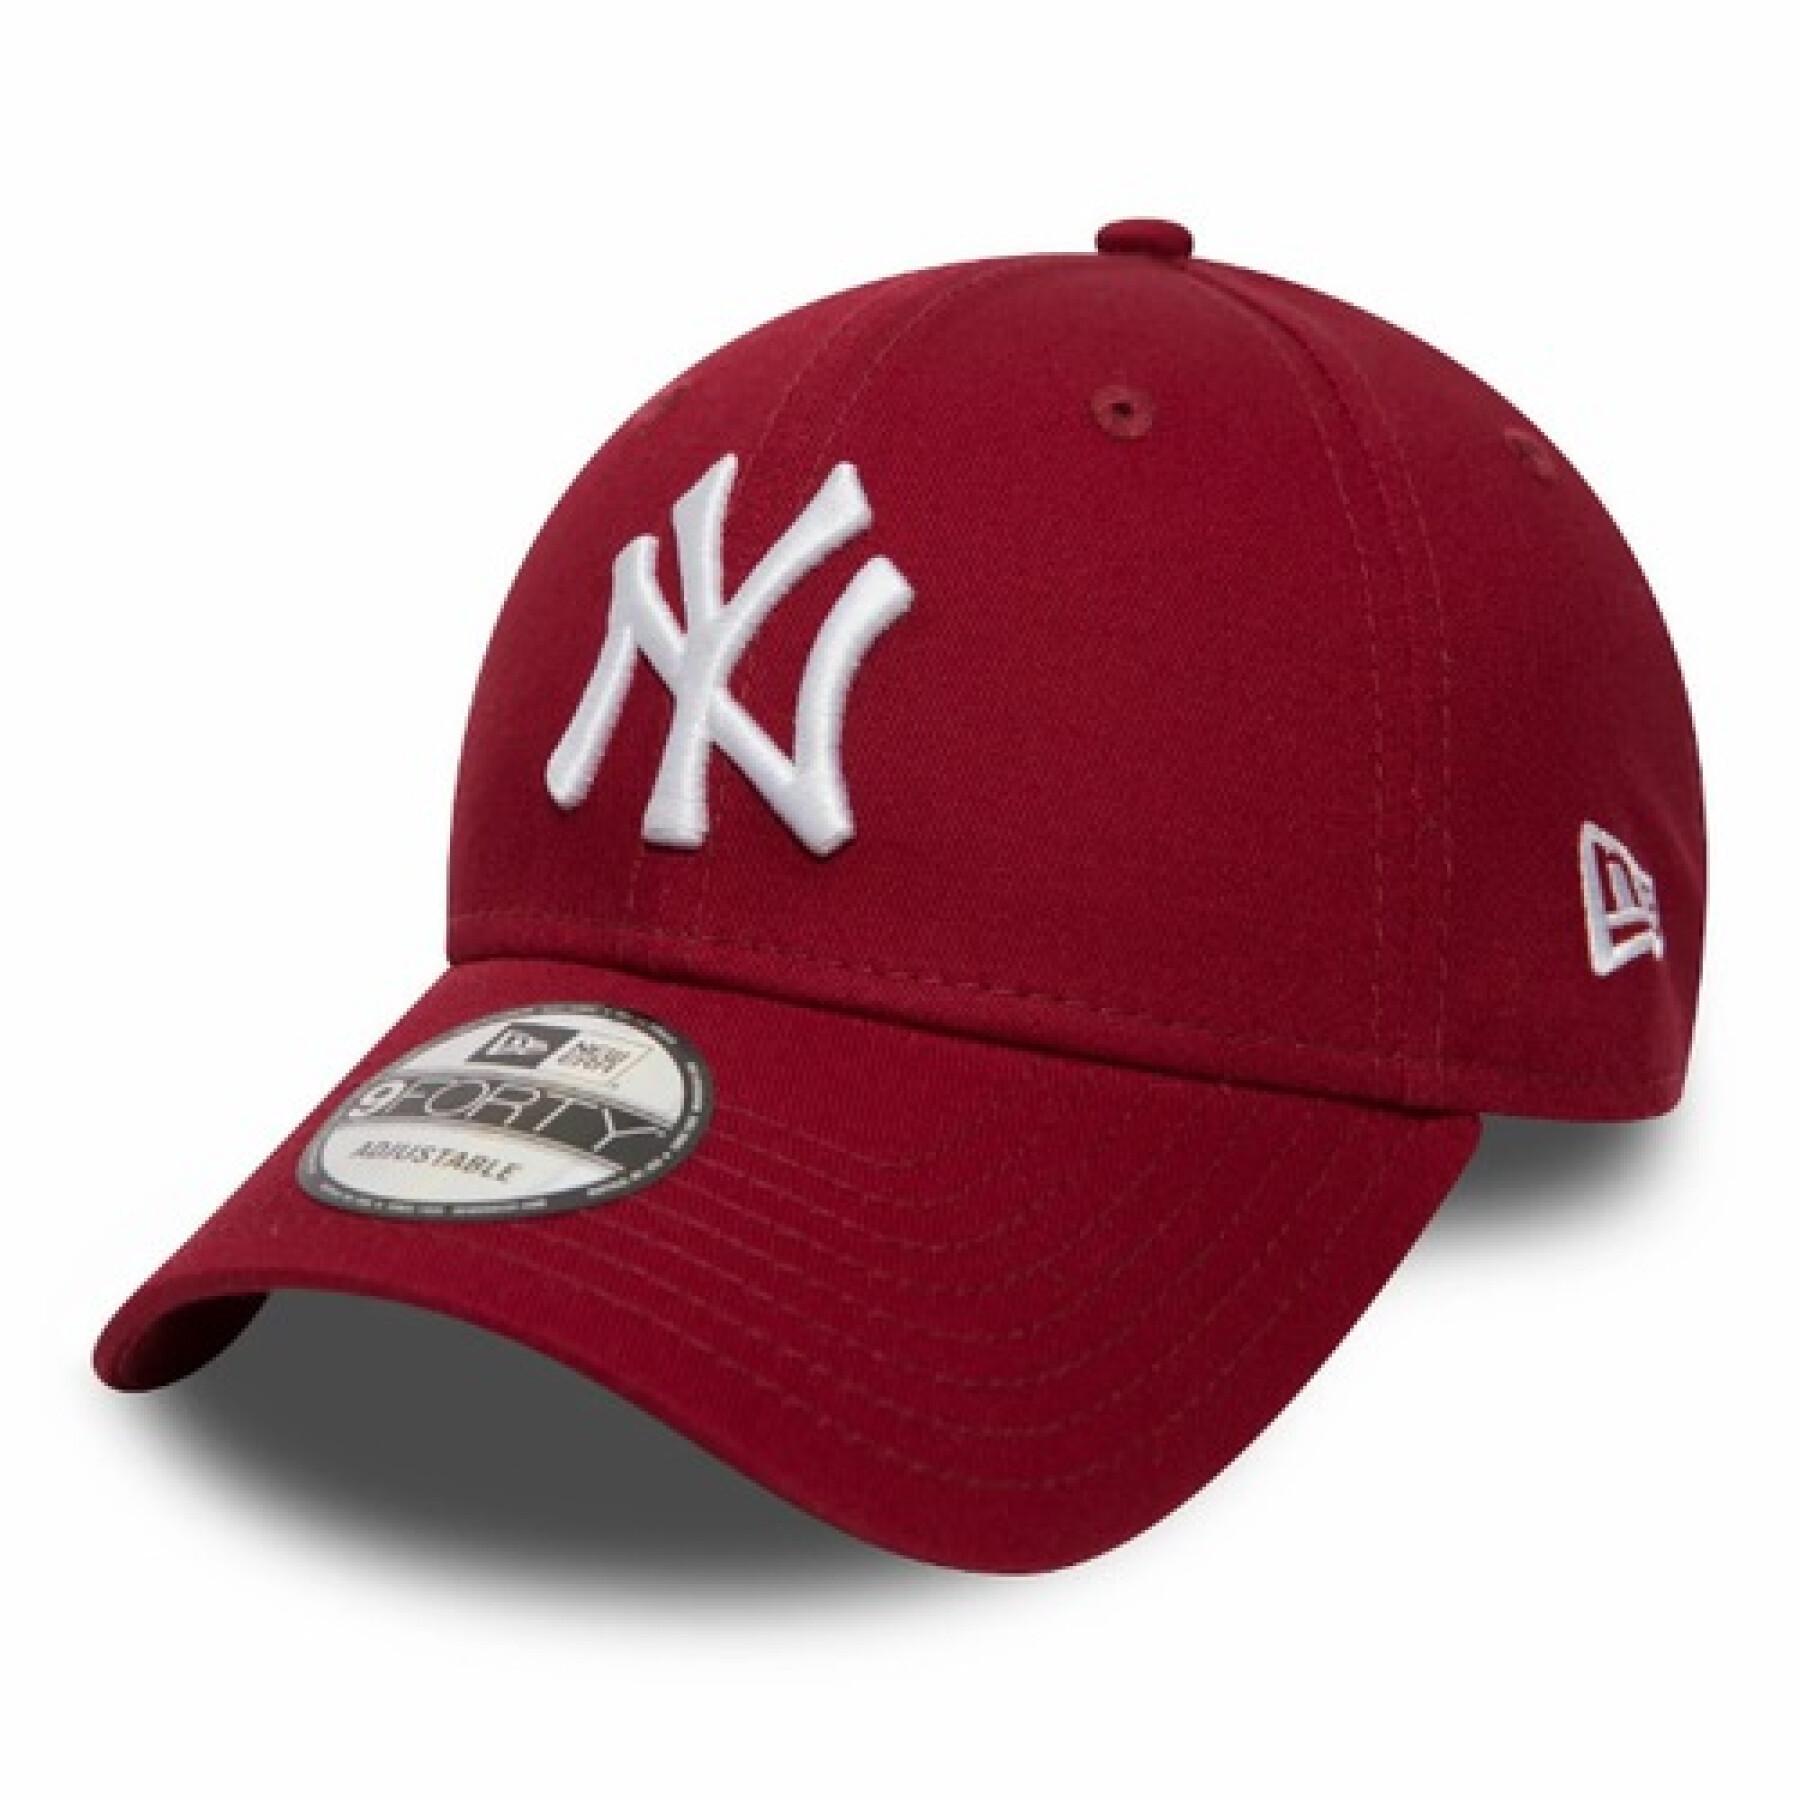 Kappe für Kinder New Era League Essential 940 New York Yankees